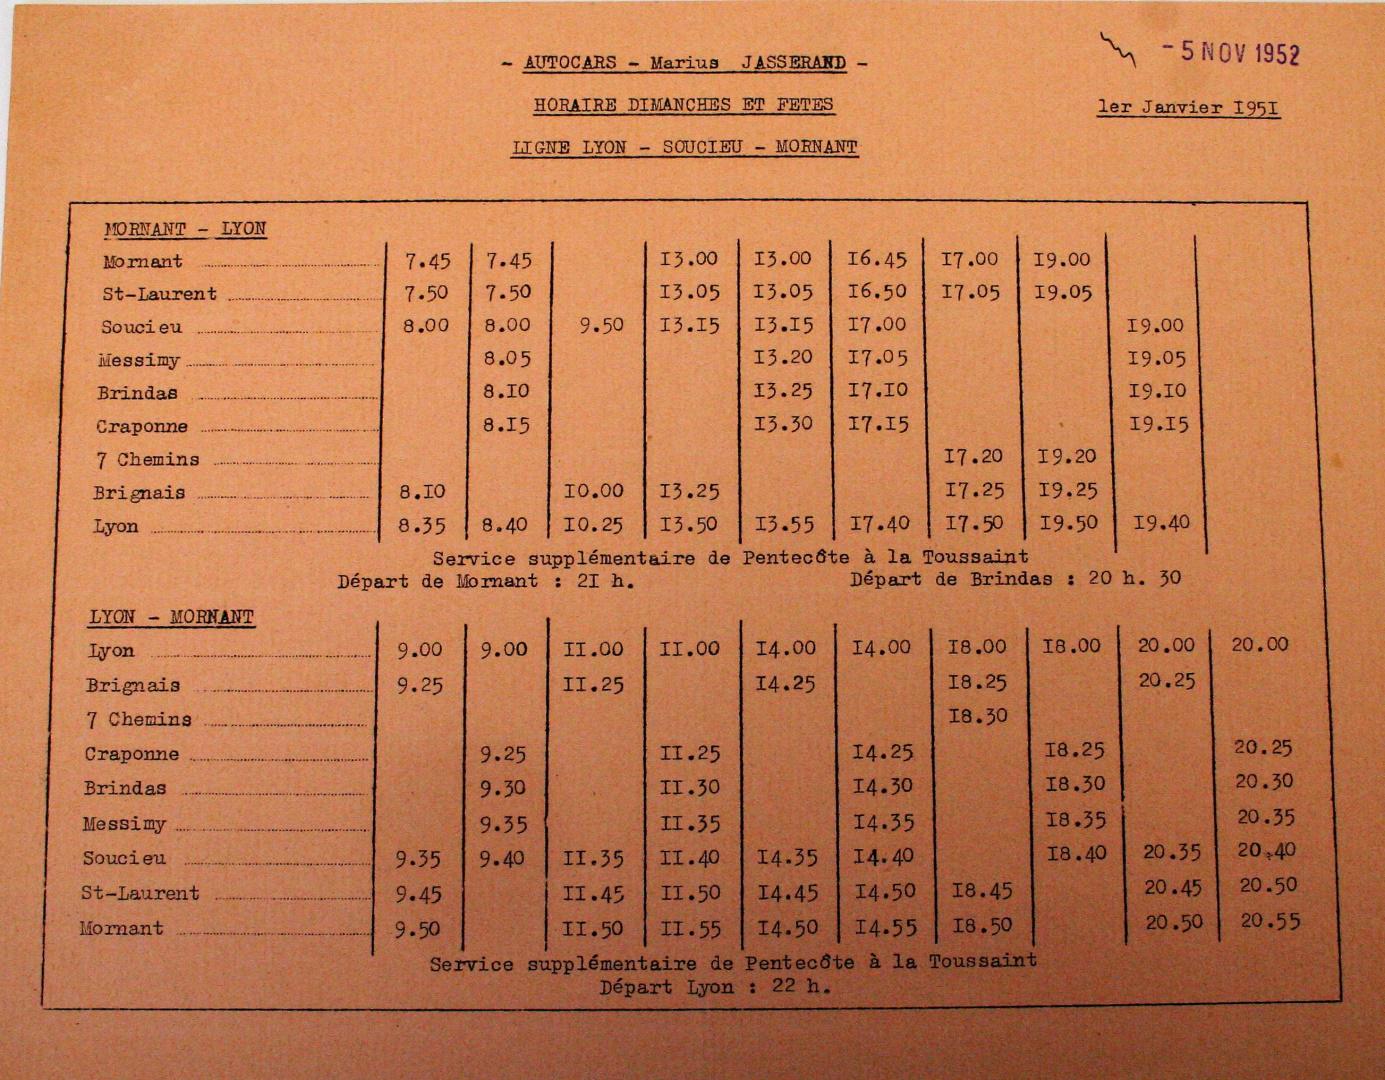 1951 Mornant timetable Sundays